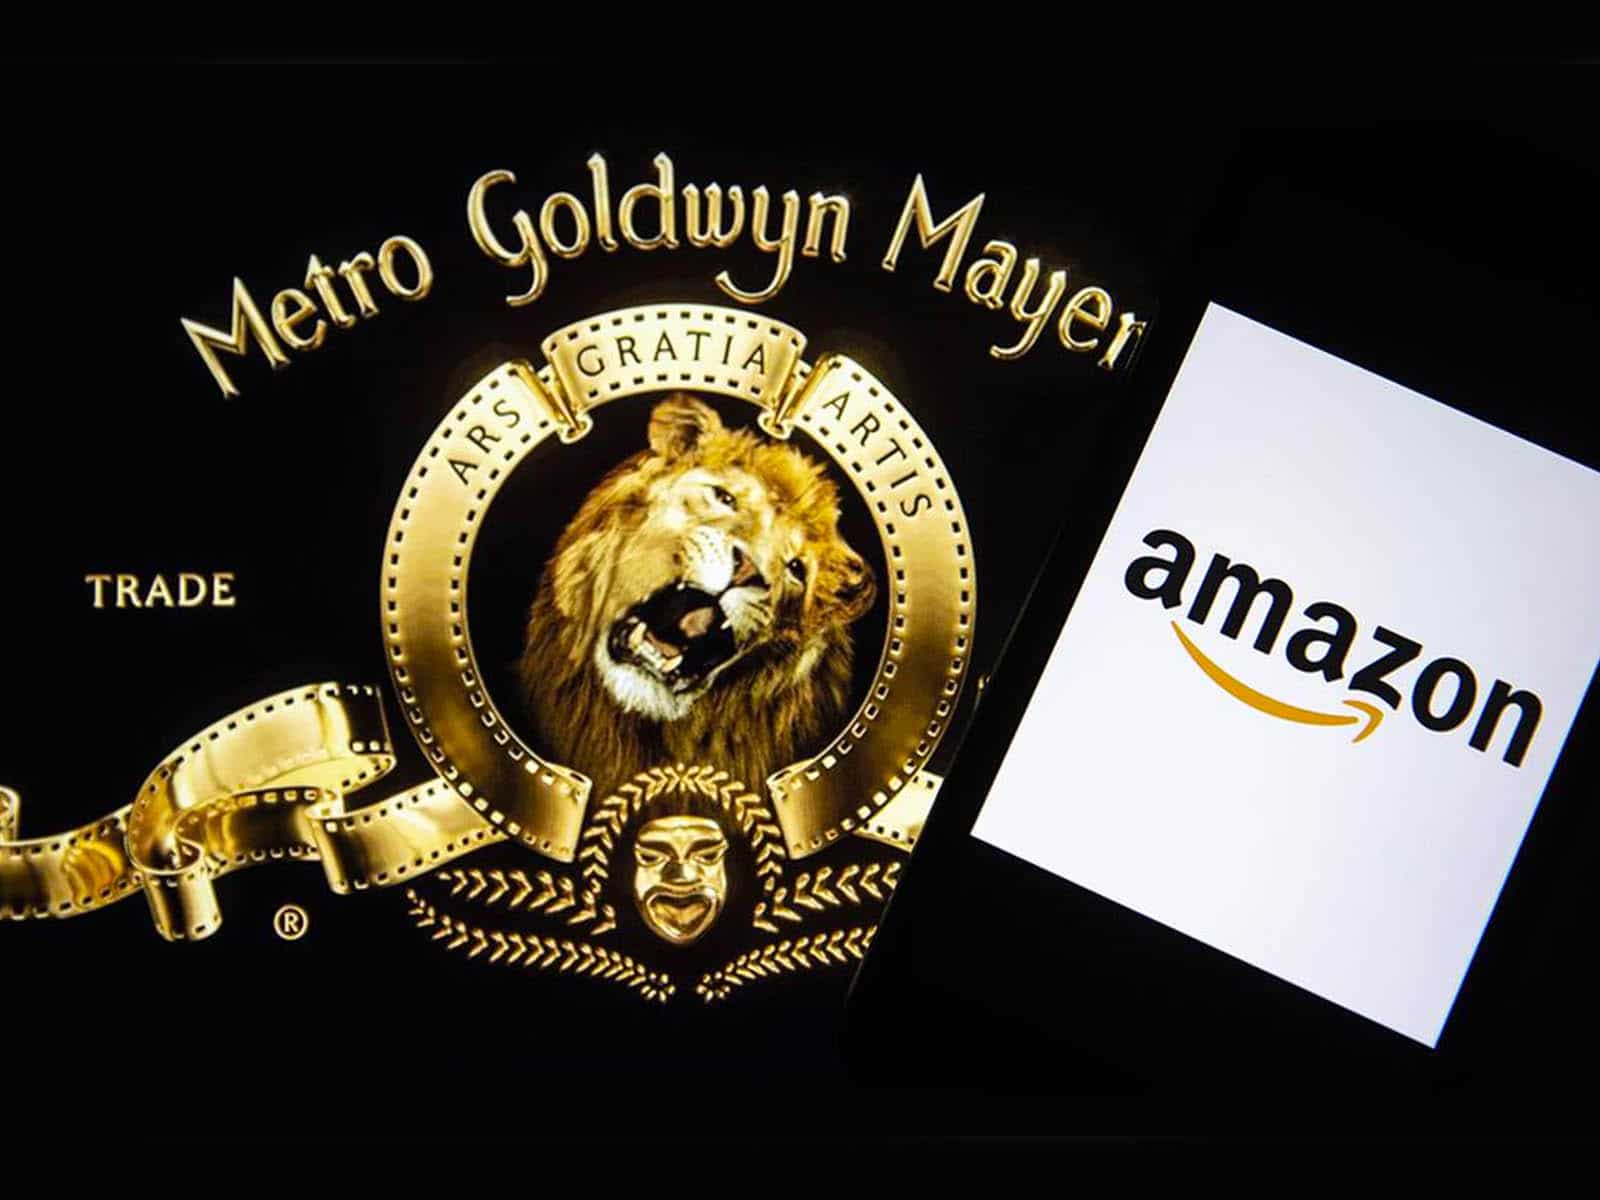 Amazon buys MGM for 8.5 billion dollars